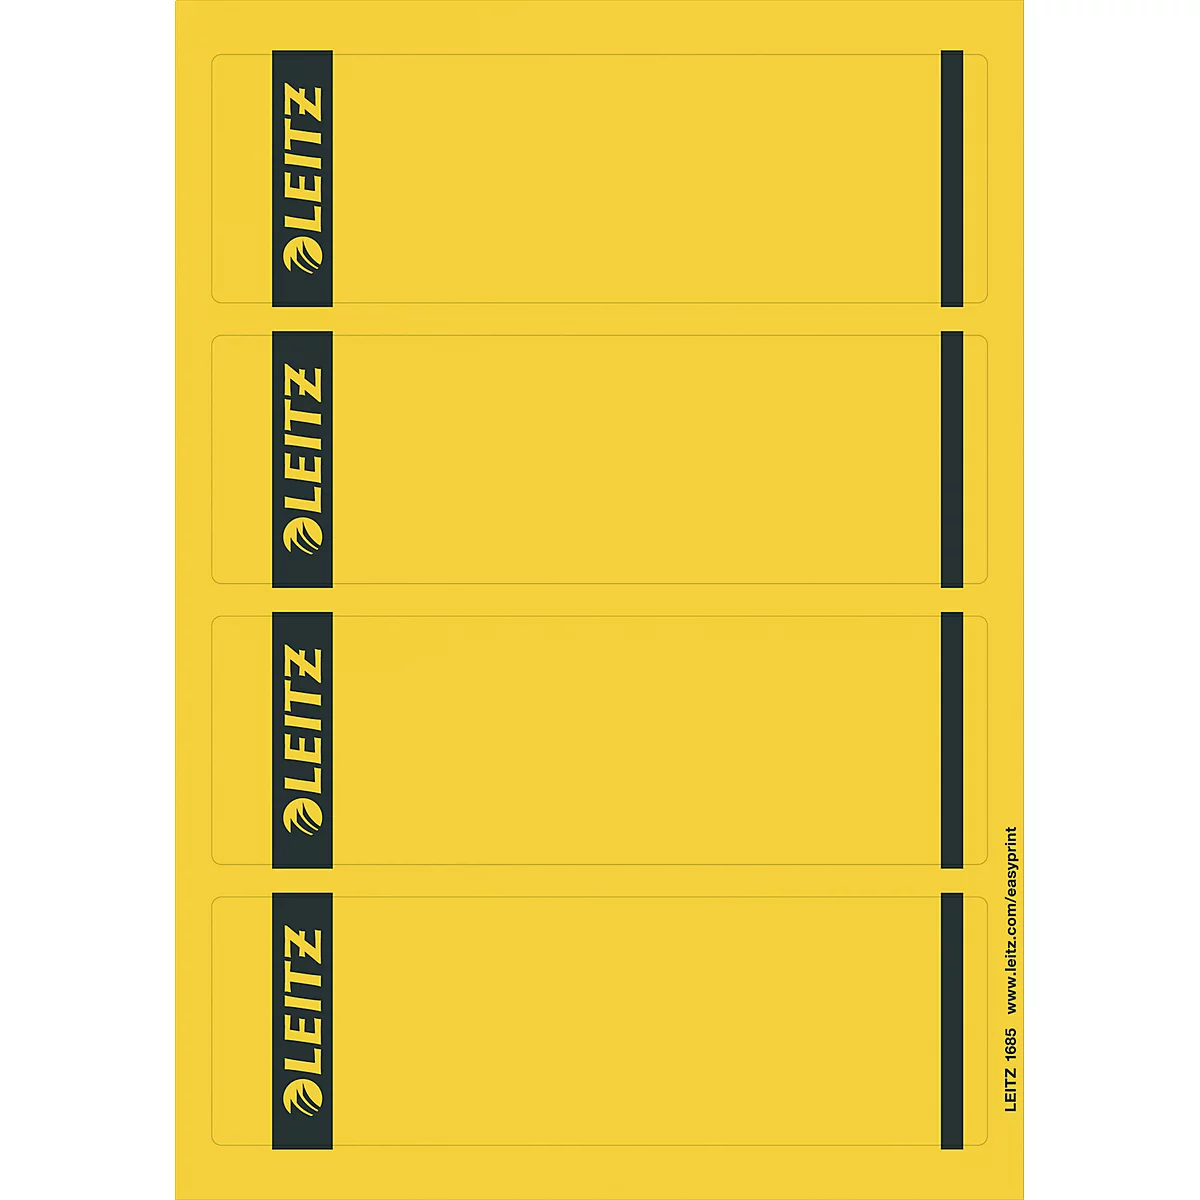 LEITZ® Rückenschilder kurz, PC-beschriftbar, Rückenbreite 80 mm, selbstklebend, 100 St., gelb